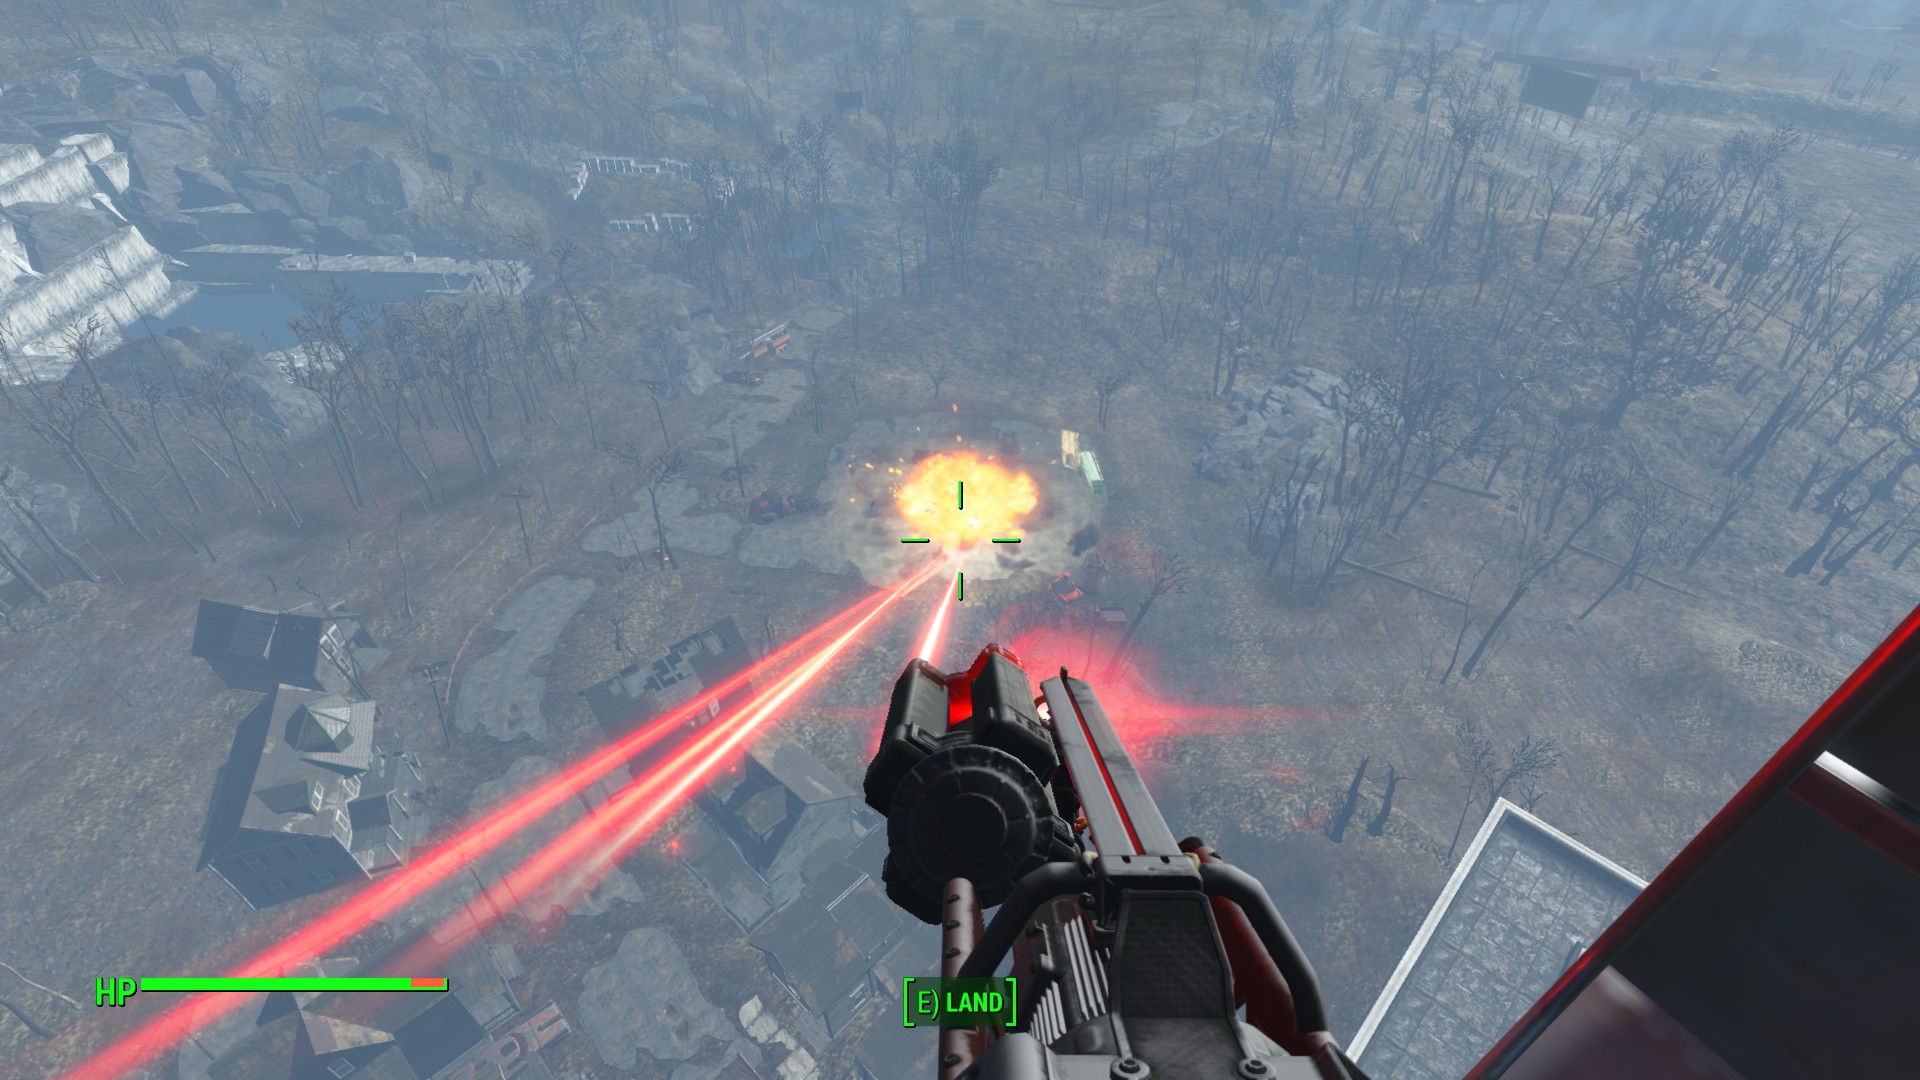 Vertibird Gatling Laser - Fallout 4 / FO4 mods. source: www.fallout4mods......